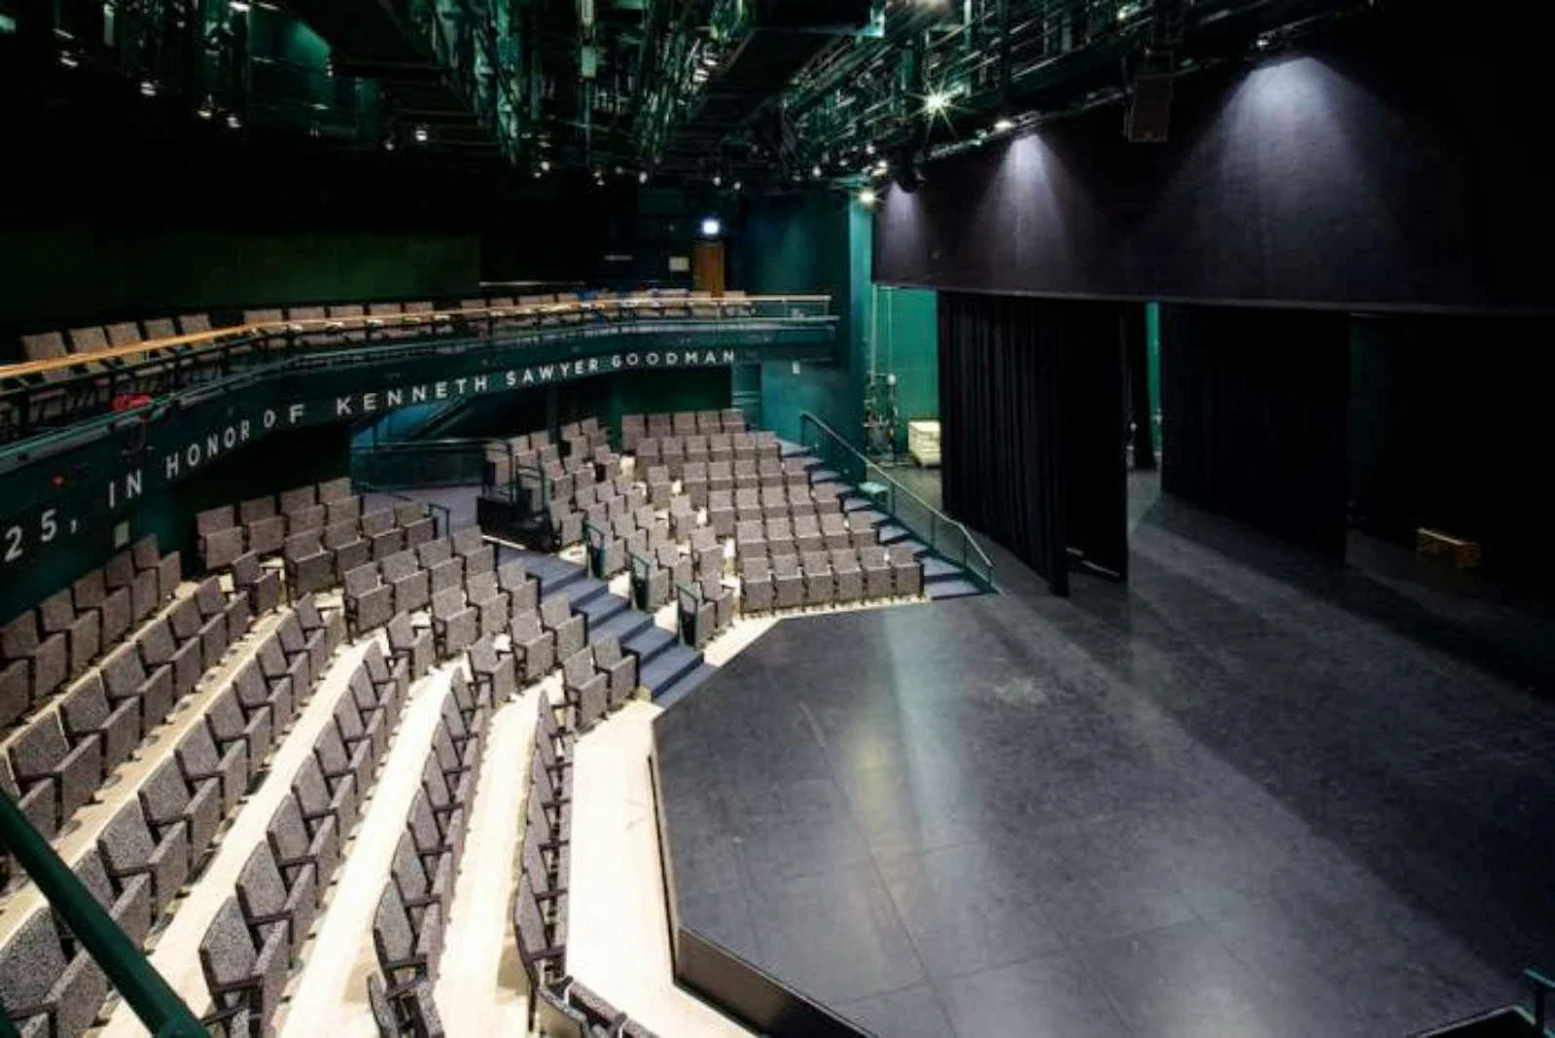 Theatre School of DePaul University by César Pelli